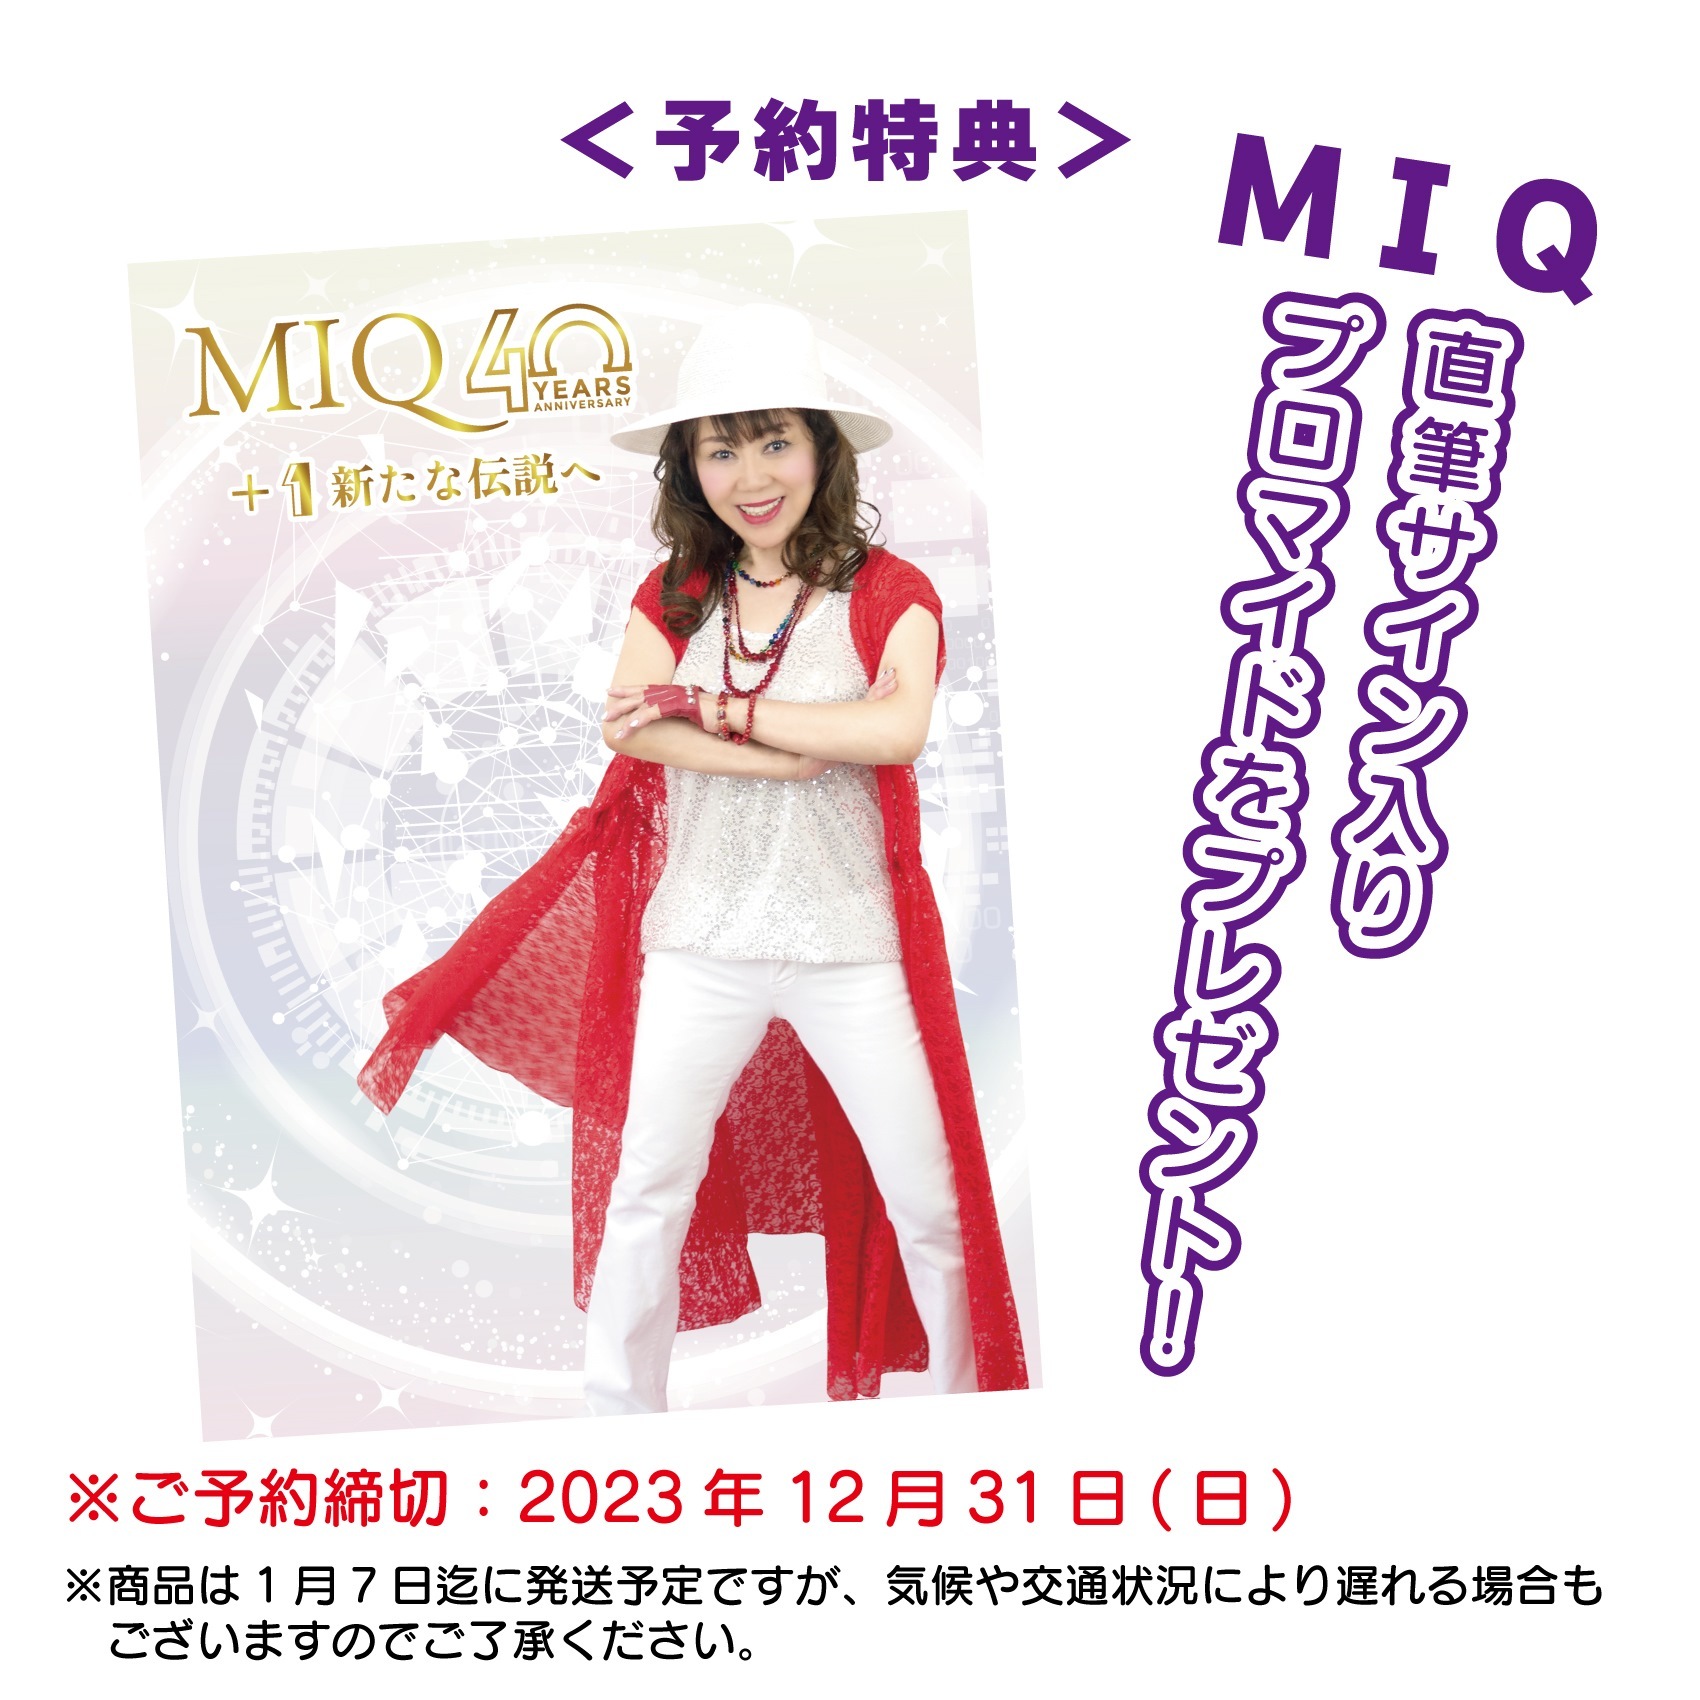 MIQ40thセルフカバーアルバム発売決定！_d0155569_16483682.jpg